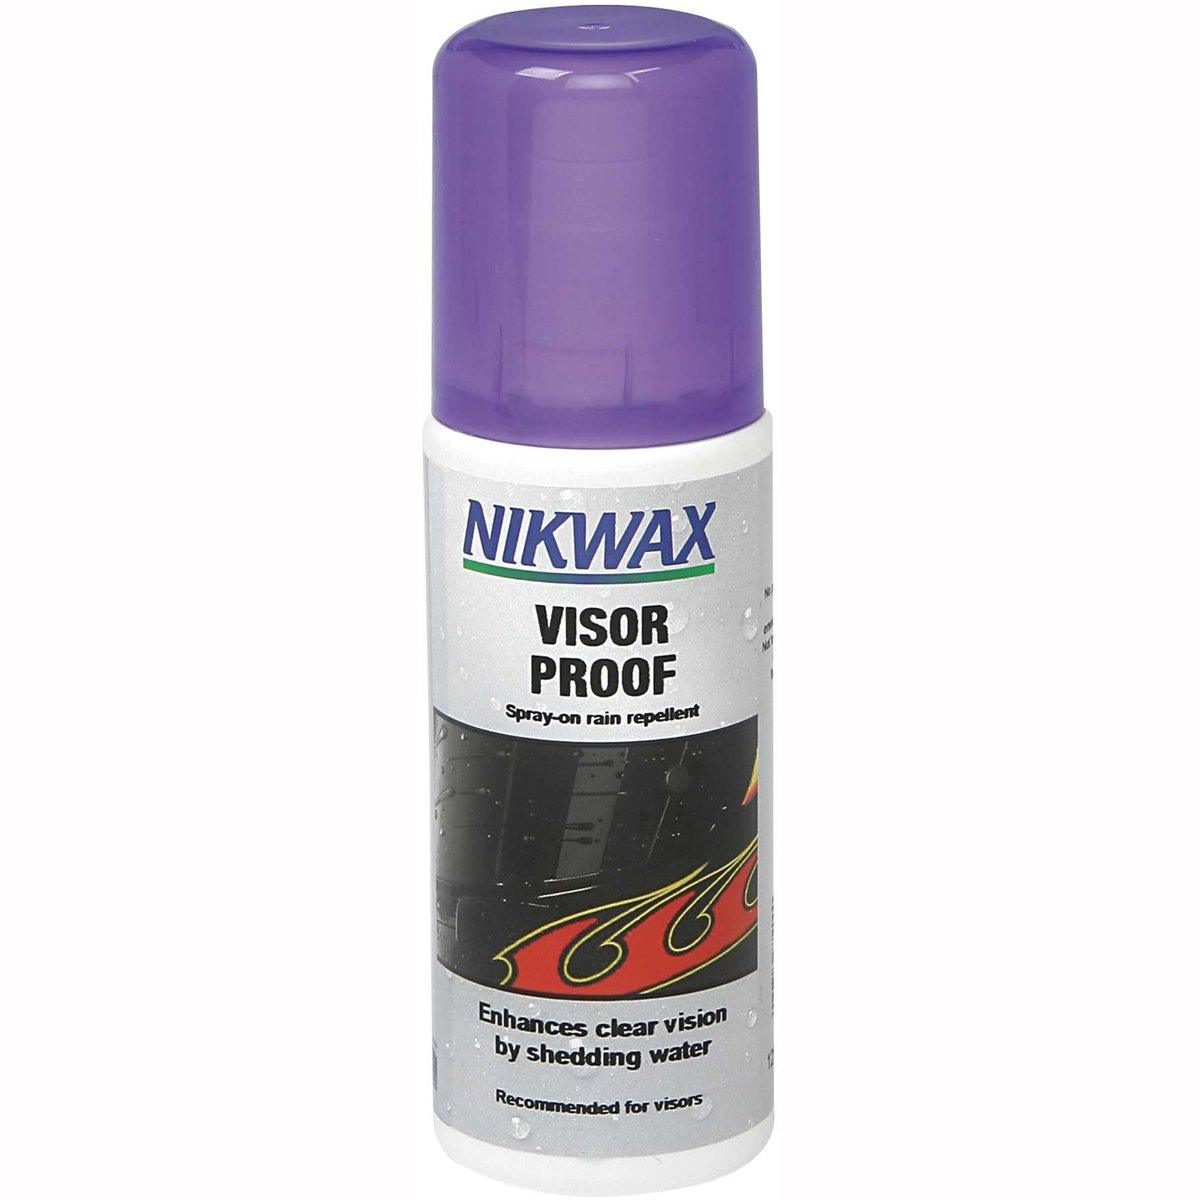 Nikwax Visor Proof Rain Repellent Spray: Make rain bead off your visor